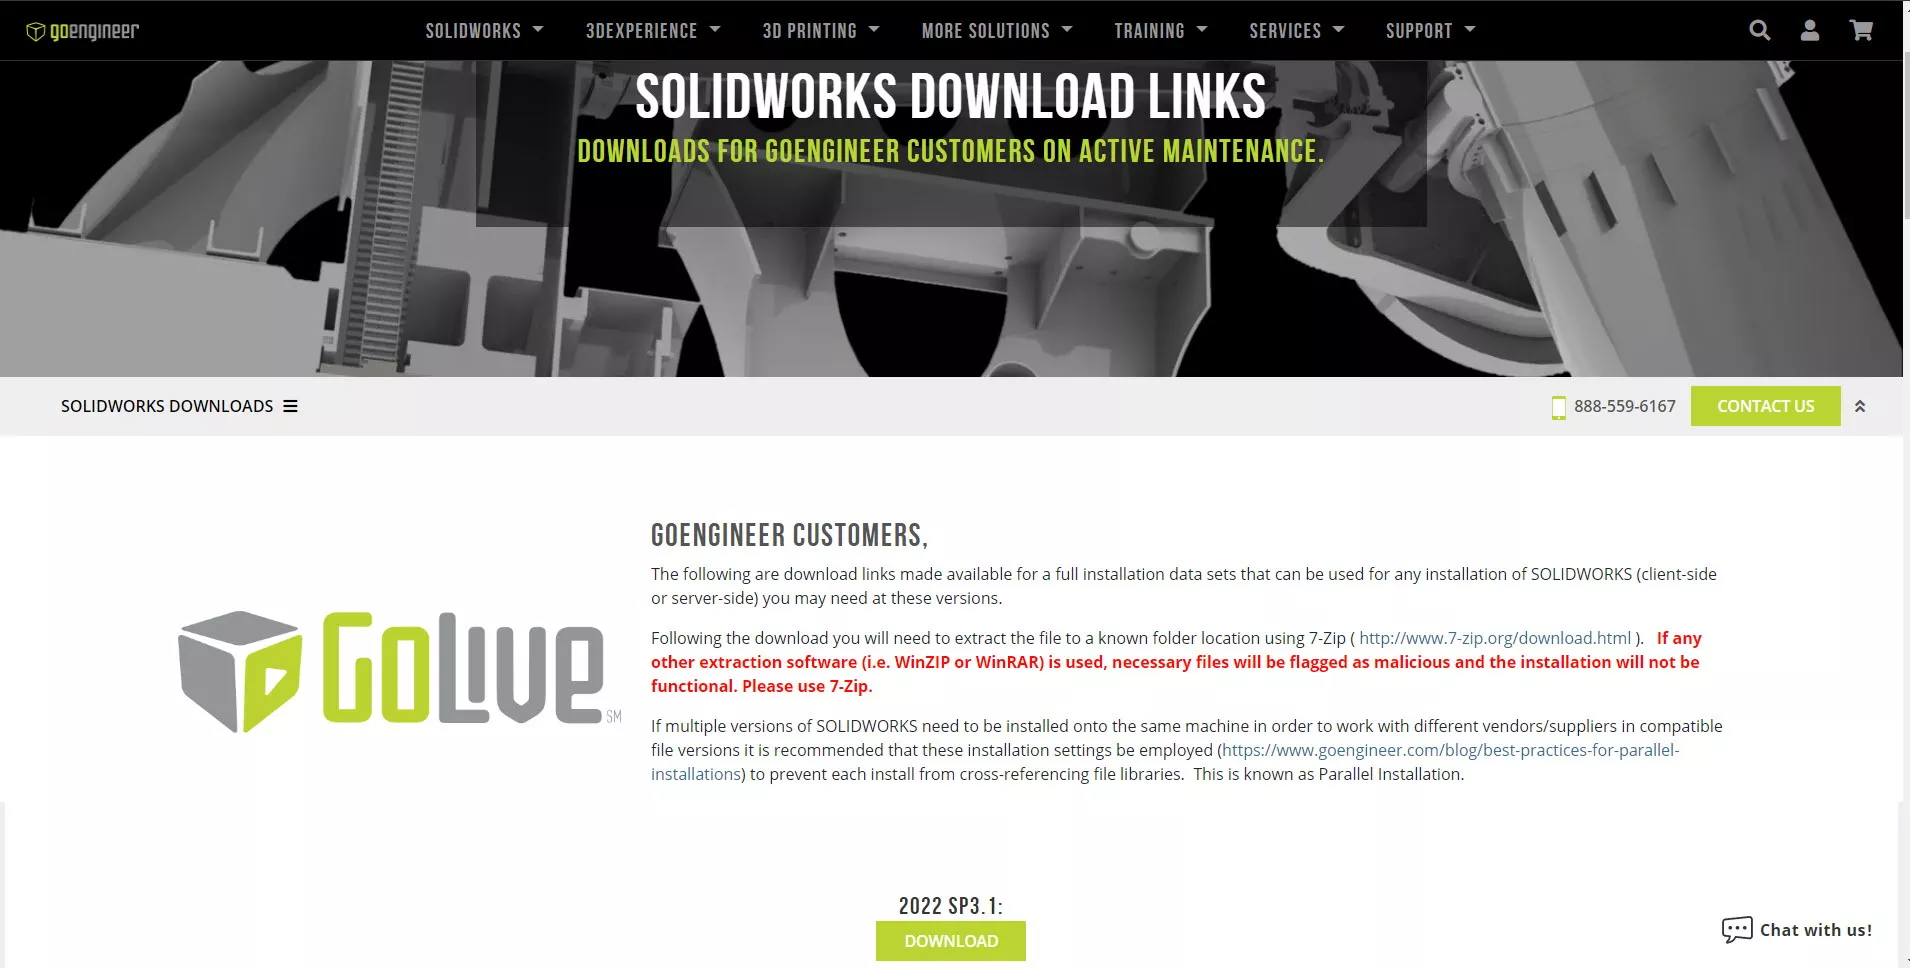 GoEngineer SOLIDWORKS Download Links Page 